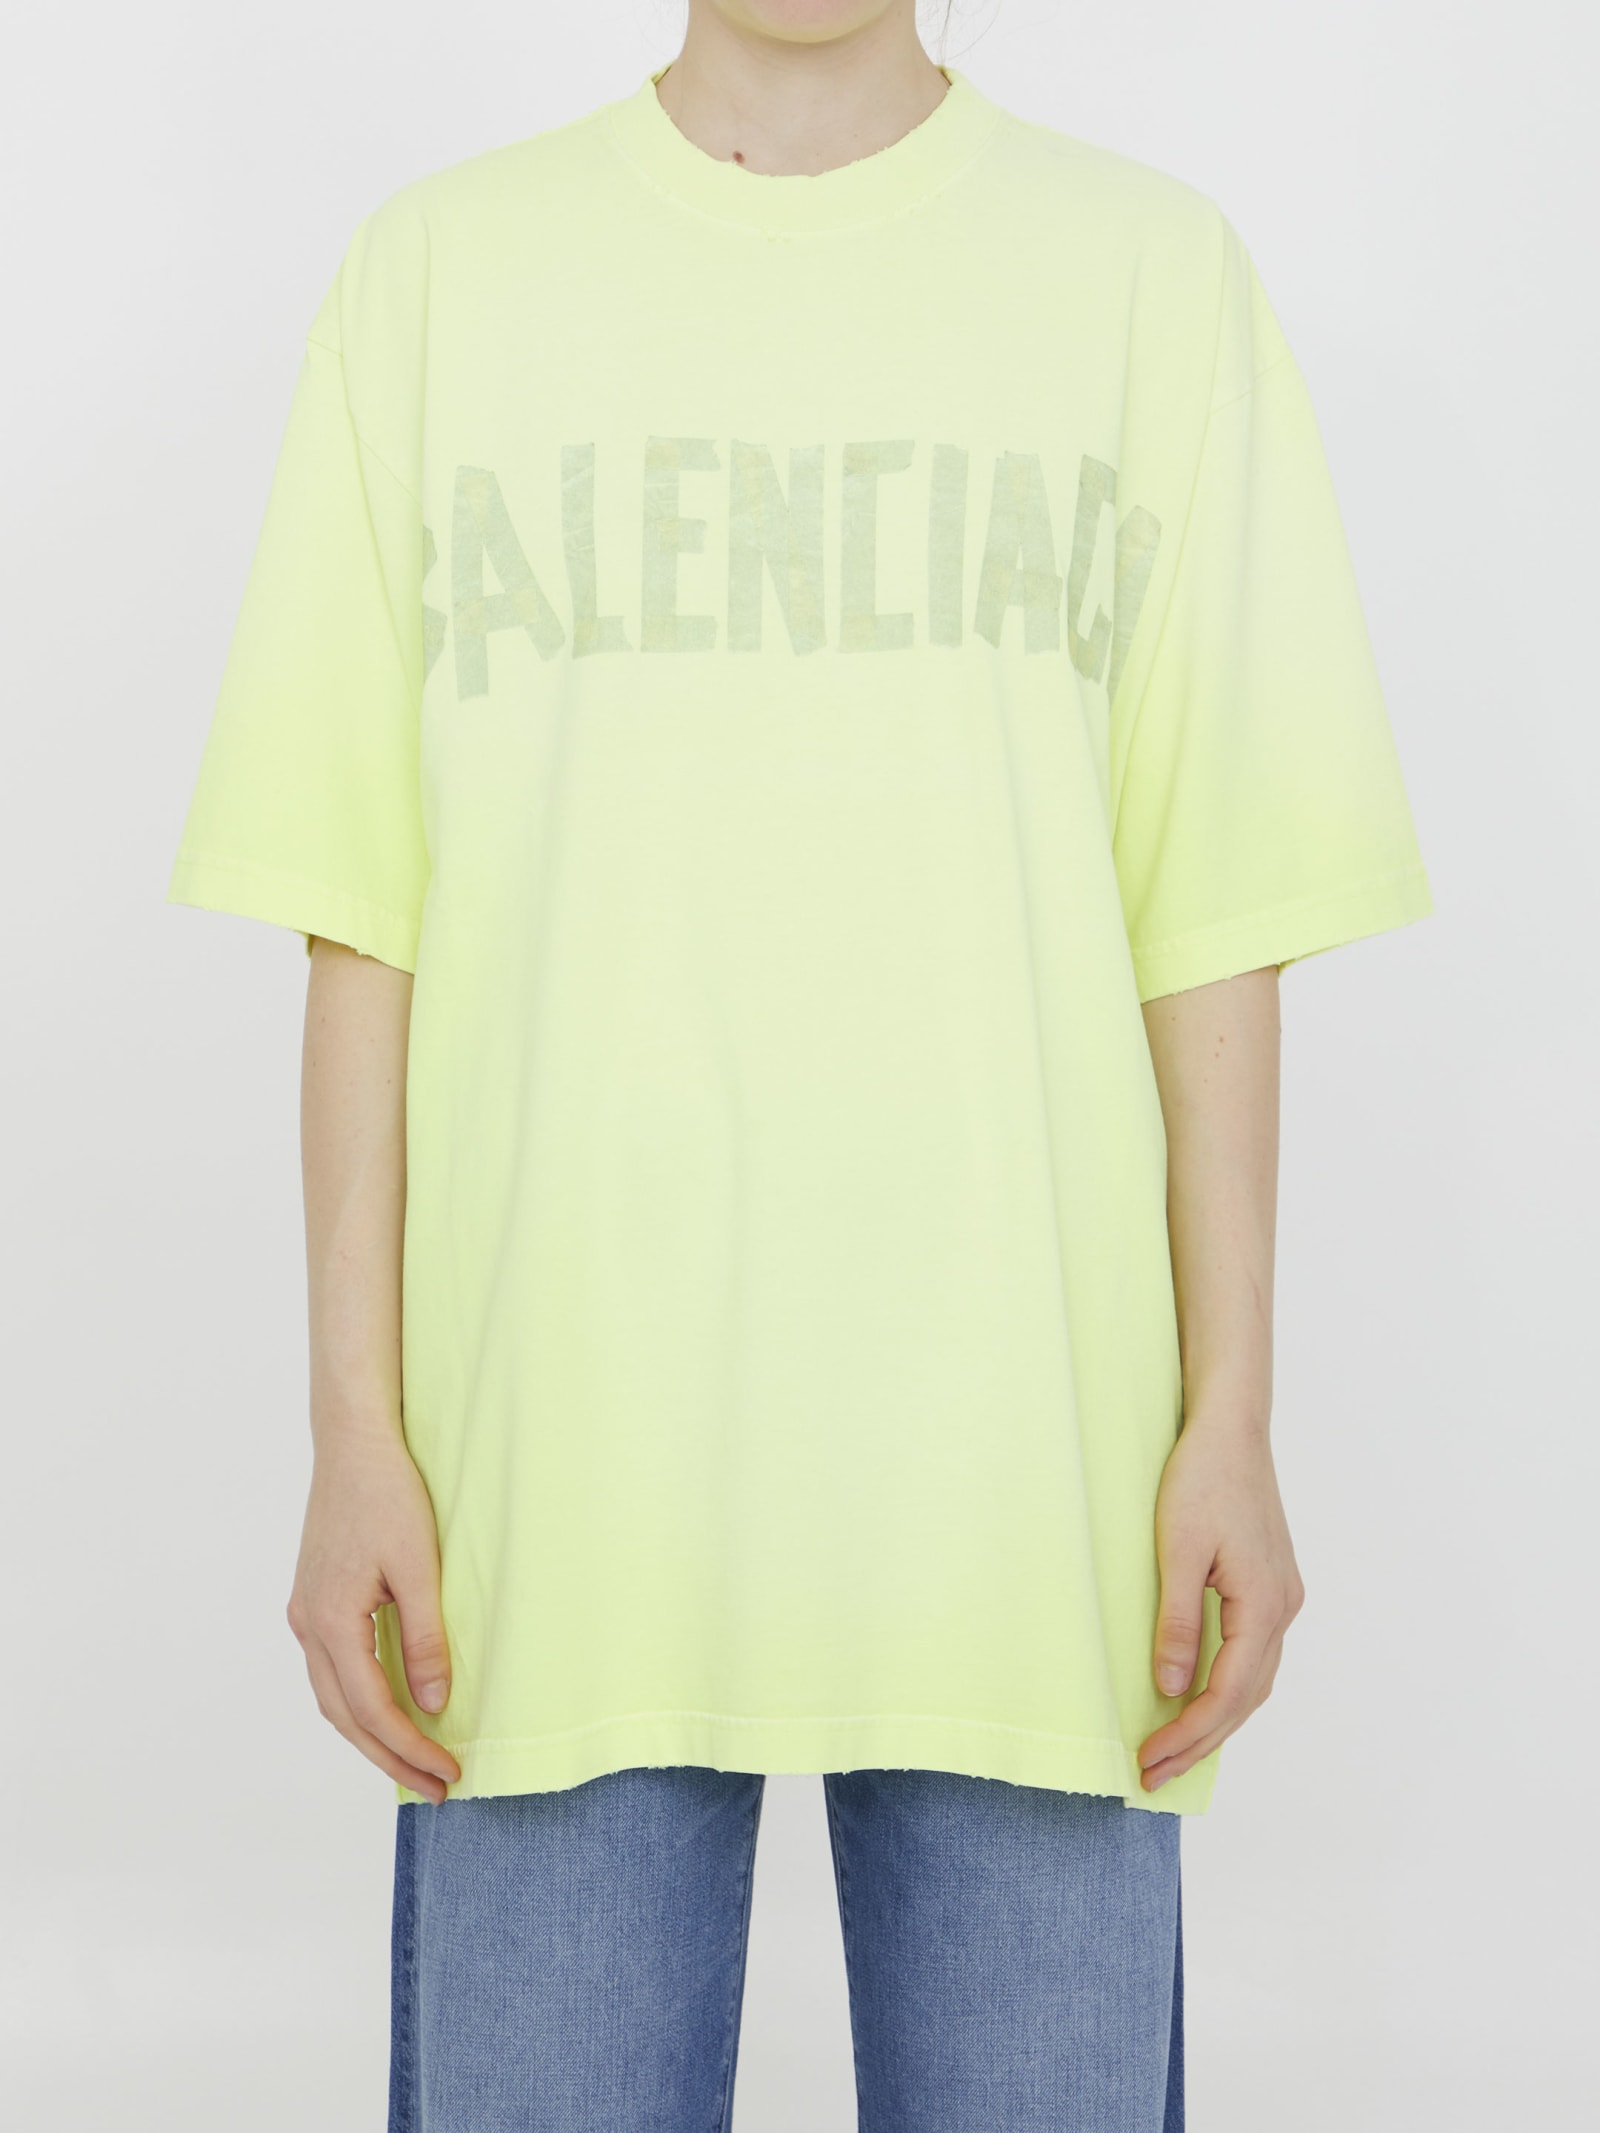 Balenciaga Tape Type T-shirt In Yellow